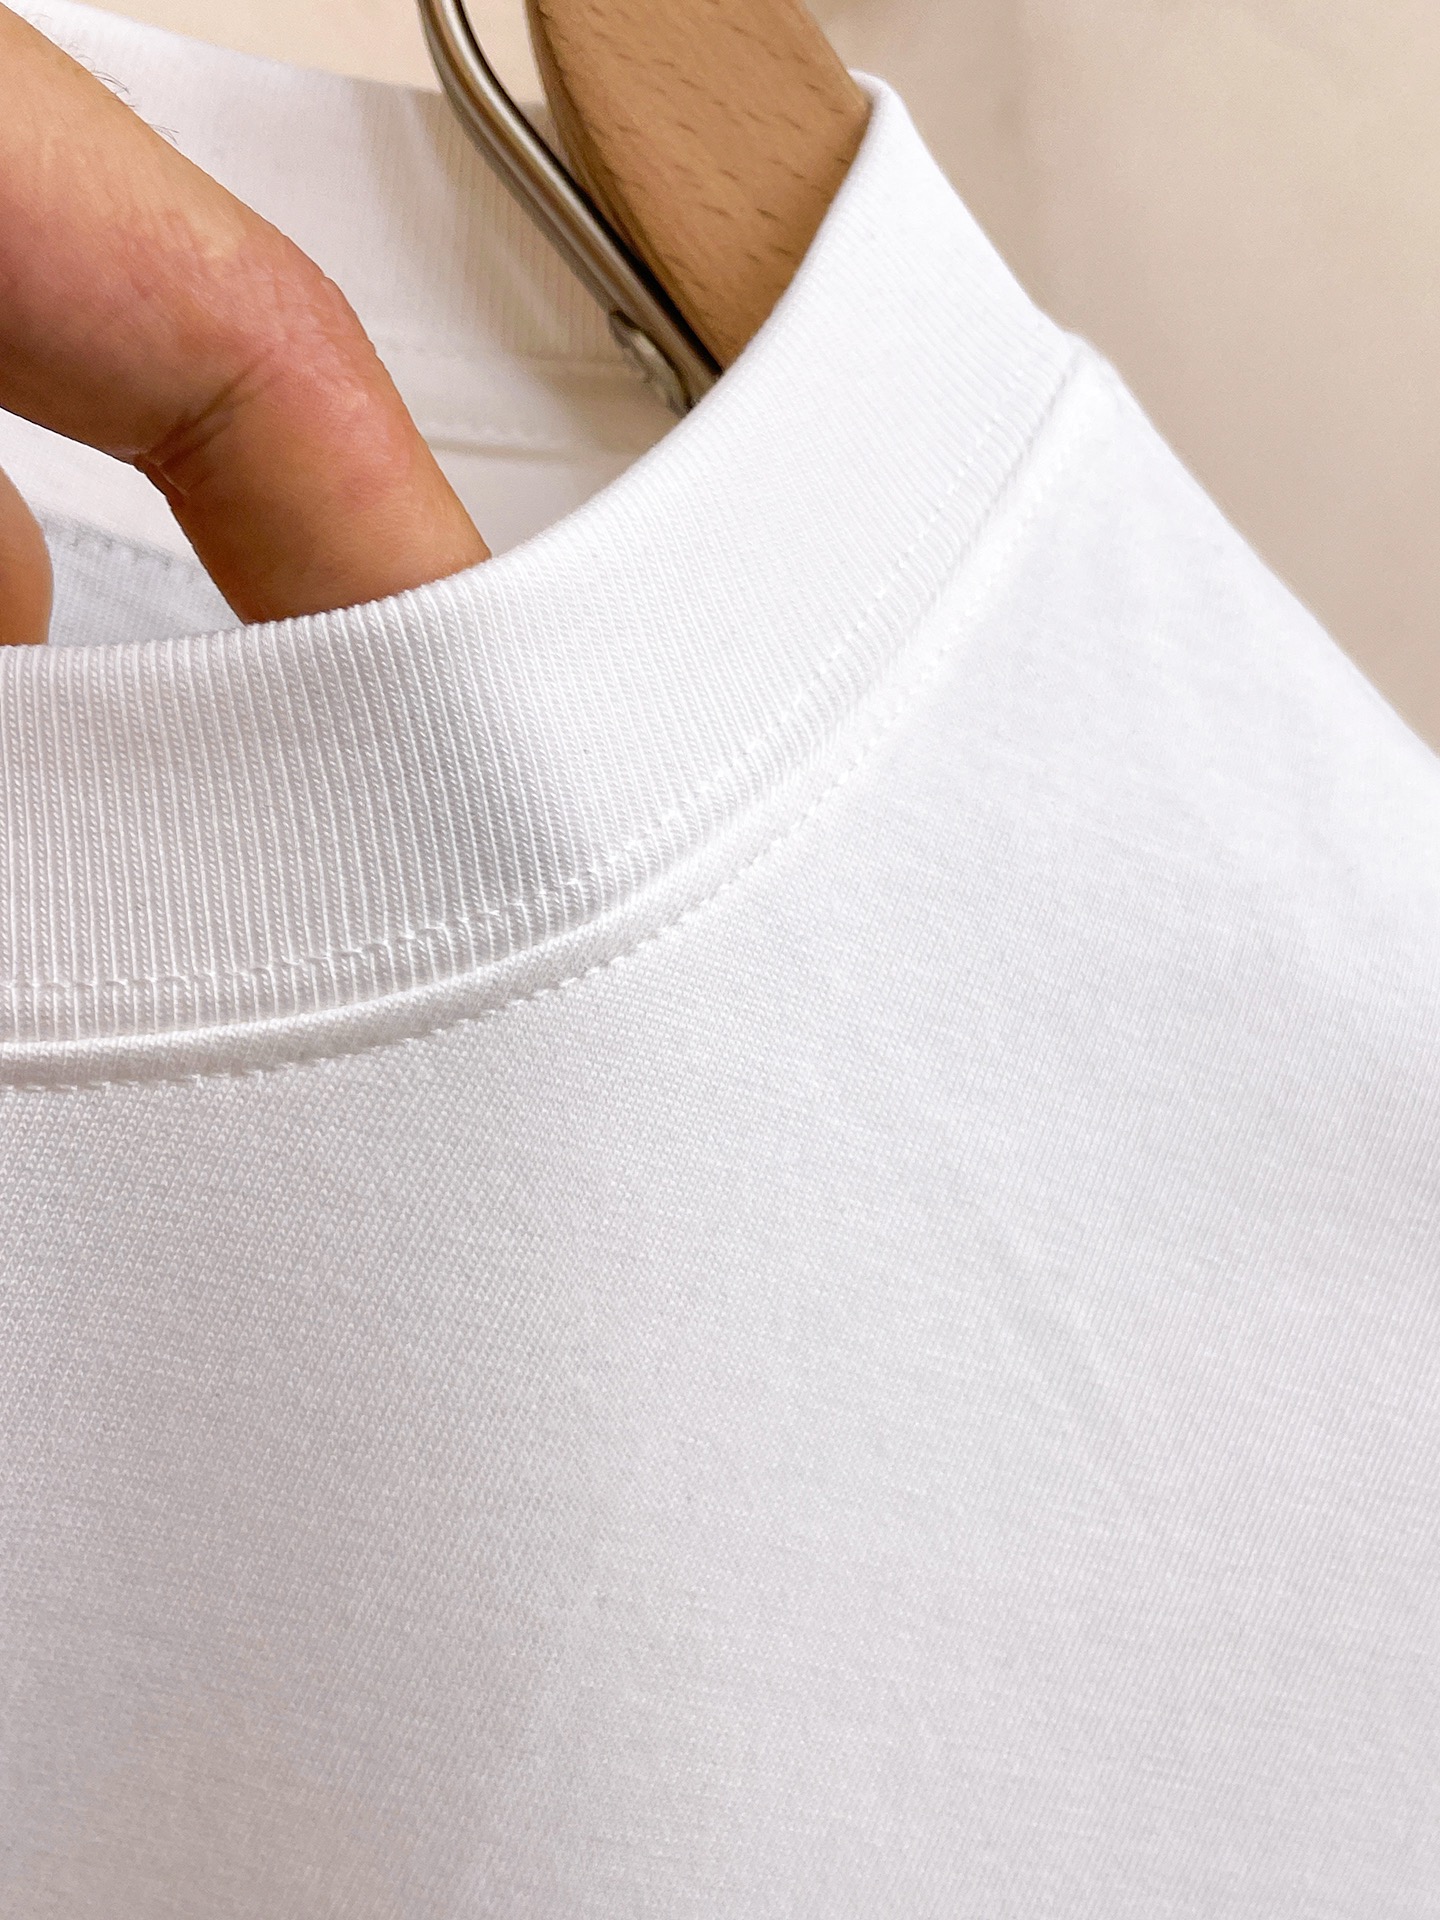 prada t シャツ レディーススーパーコピー 短袖 ゆったり 純綿 トップス プリント 柔らかい シンプル ホワイト_5